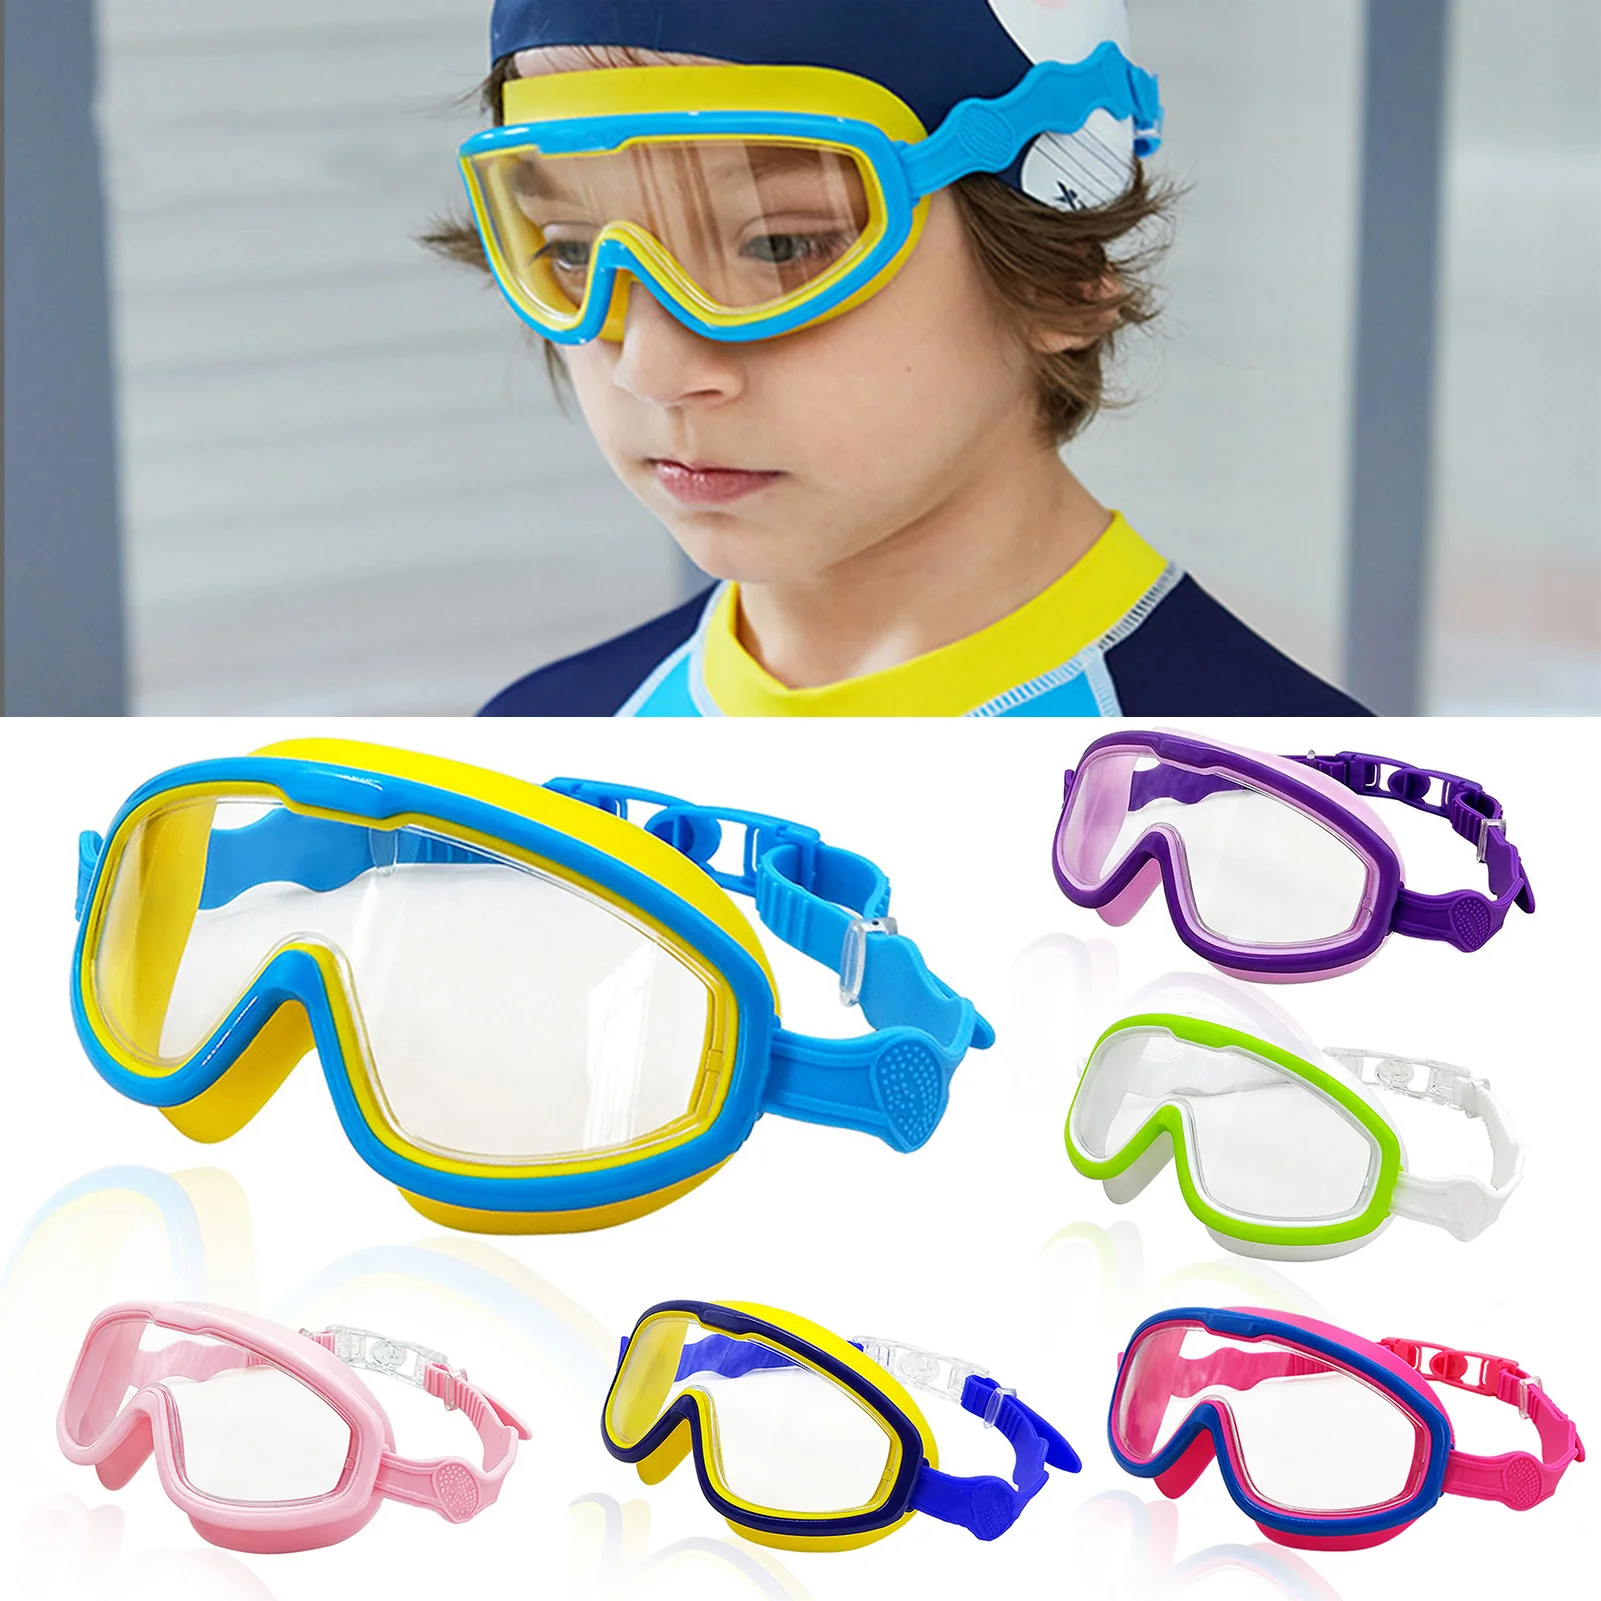 Big Frame Kids Swim Goggles Anti Fog Wide View Swimming Gear for Boys Girls Children glasses for swimming pool